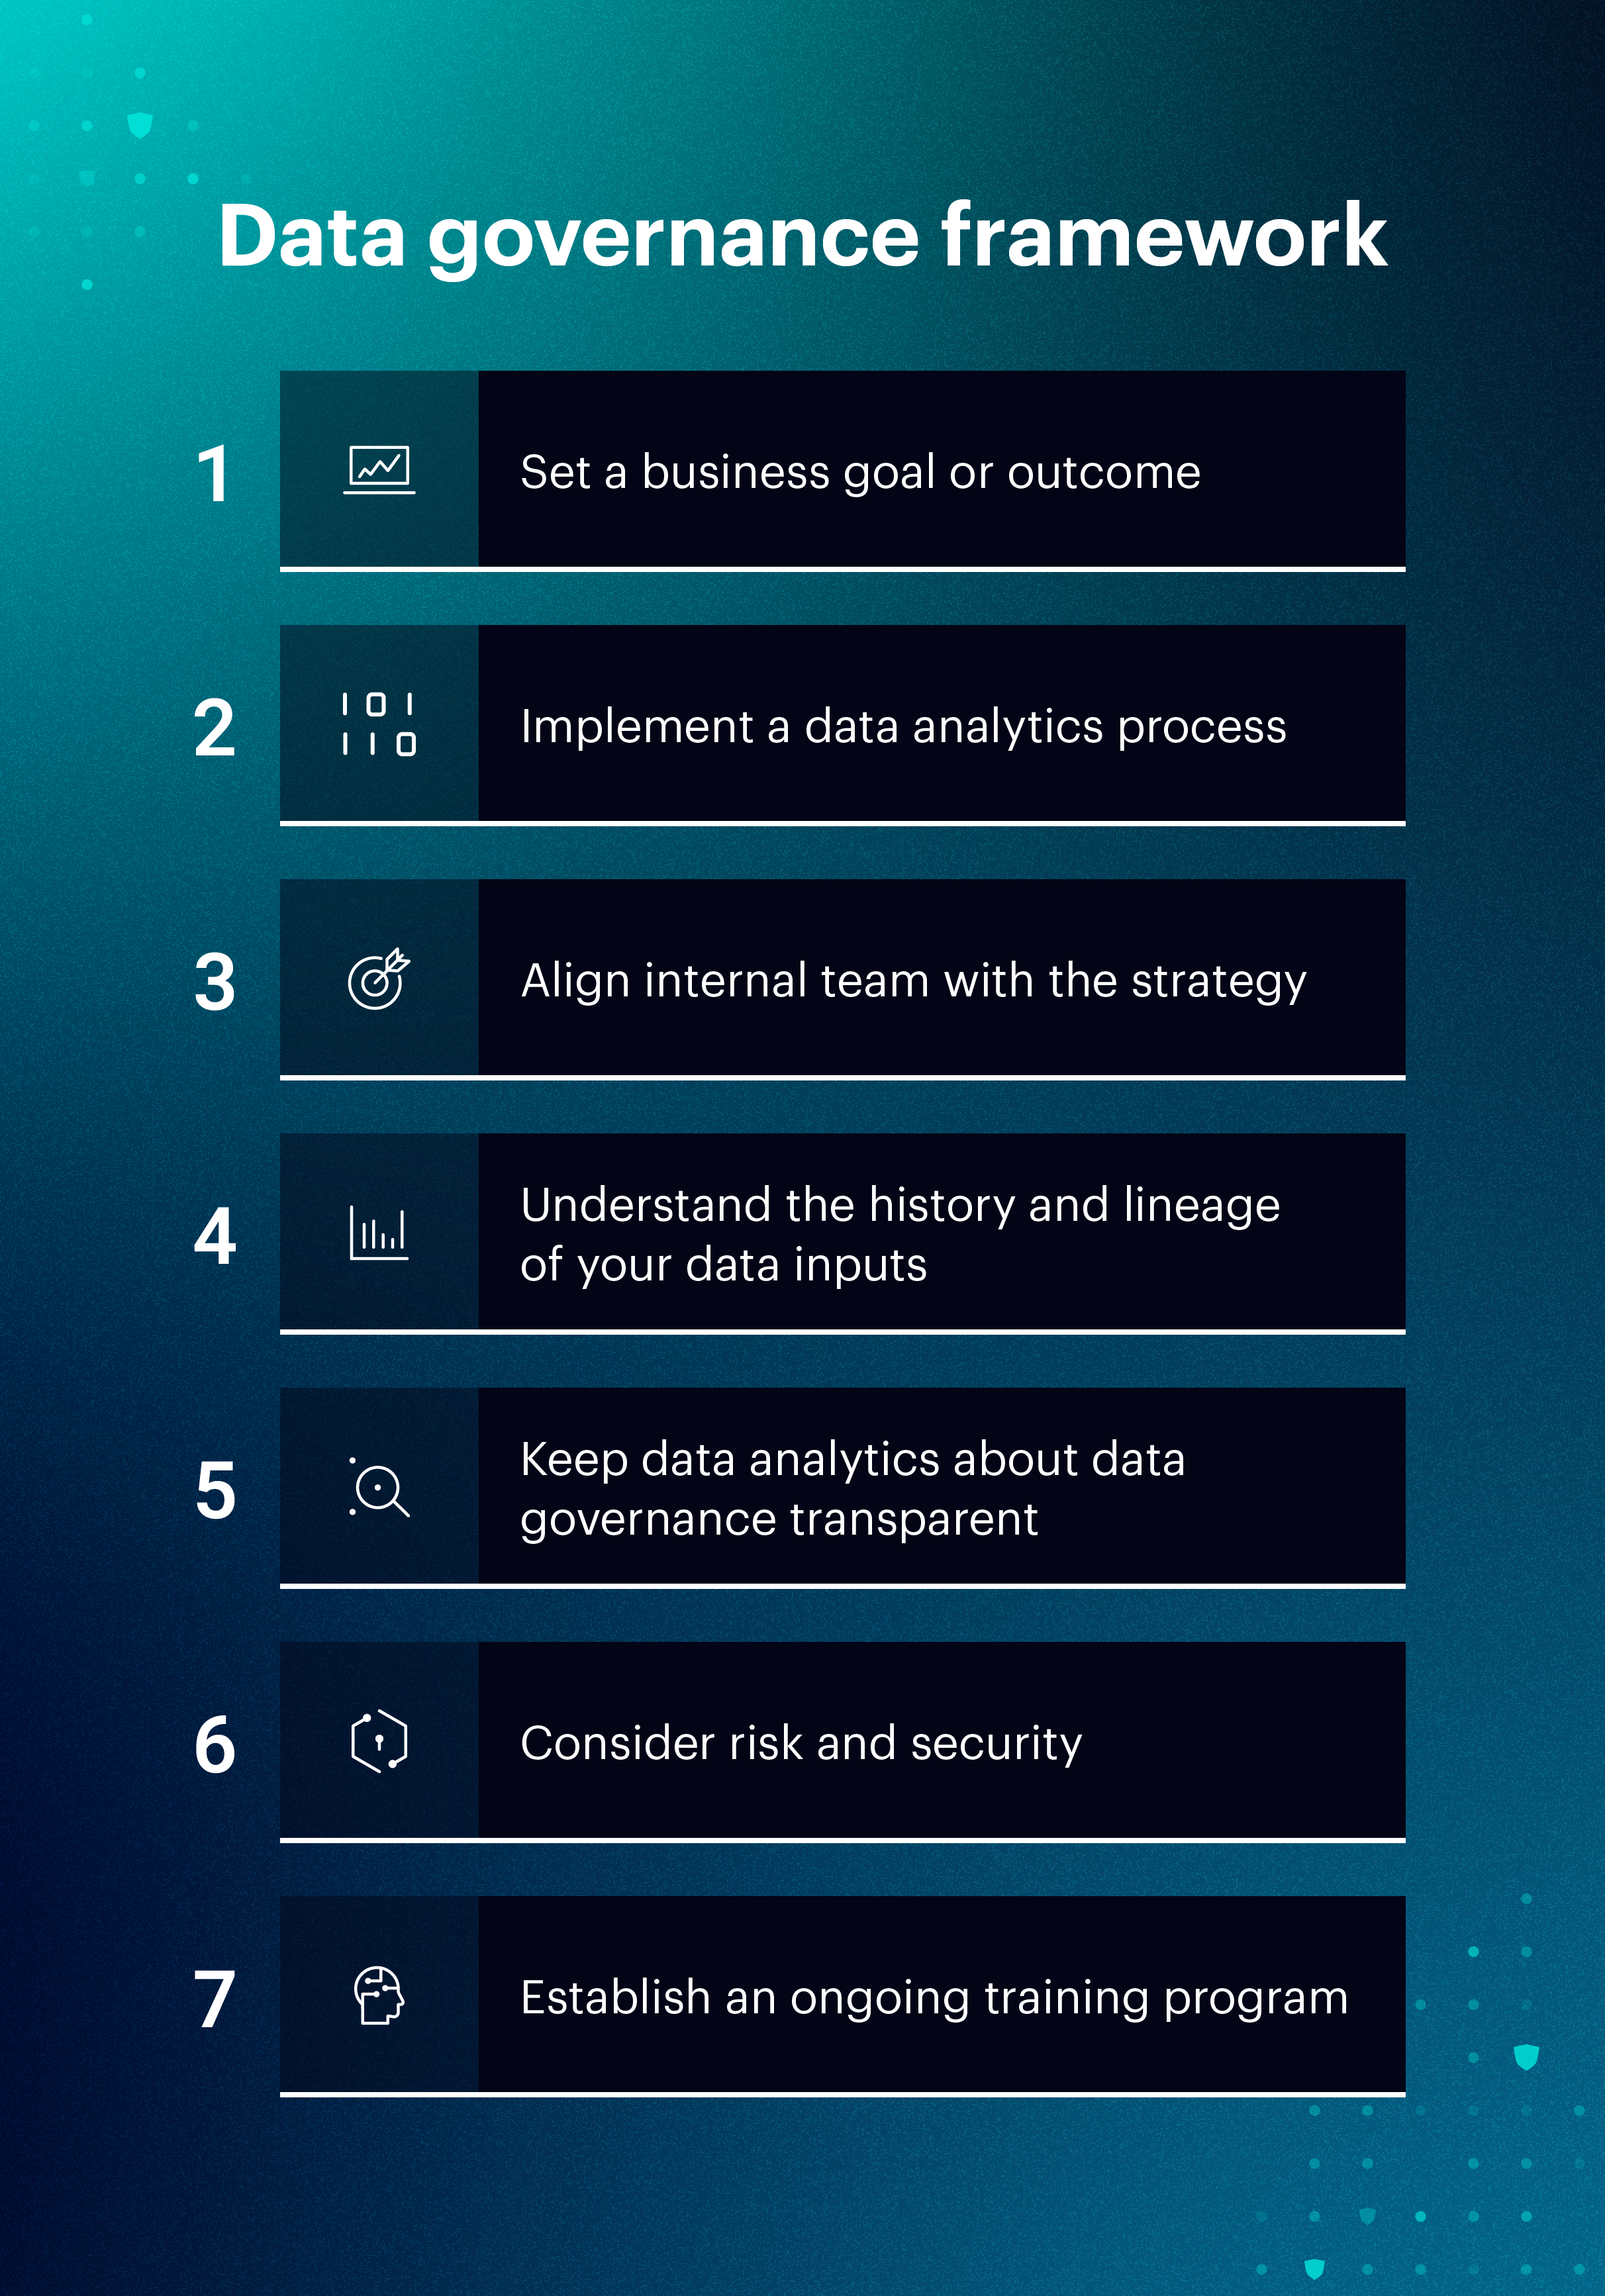 7 steps to implement a data governance framework